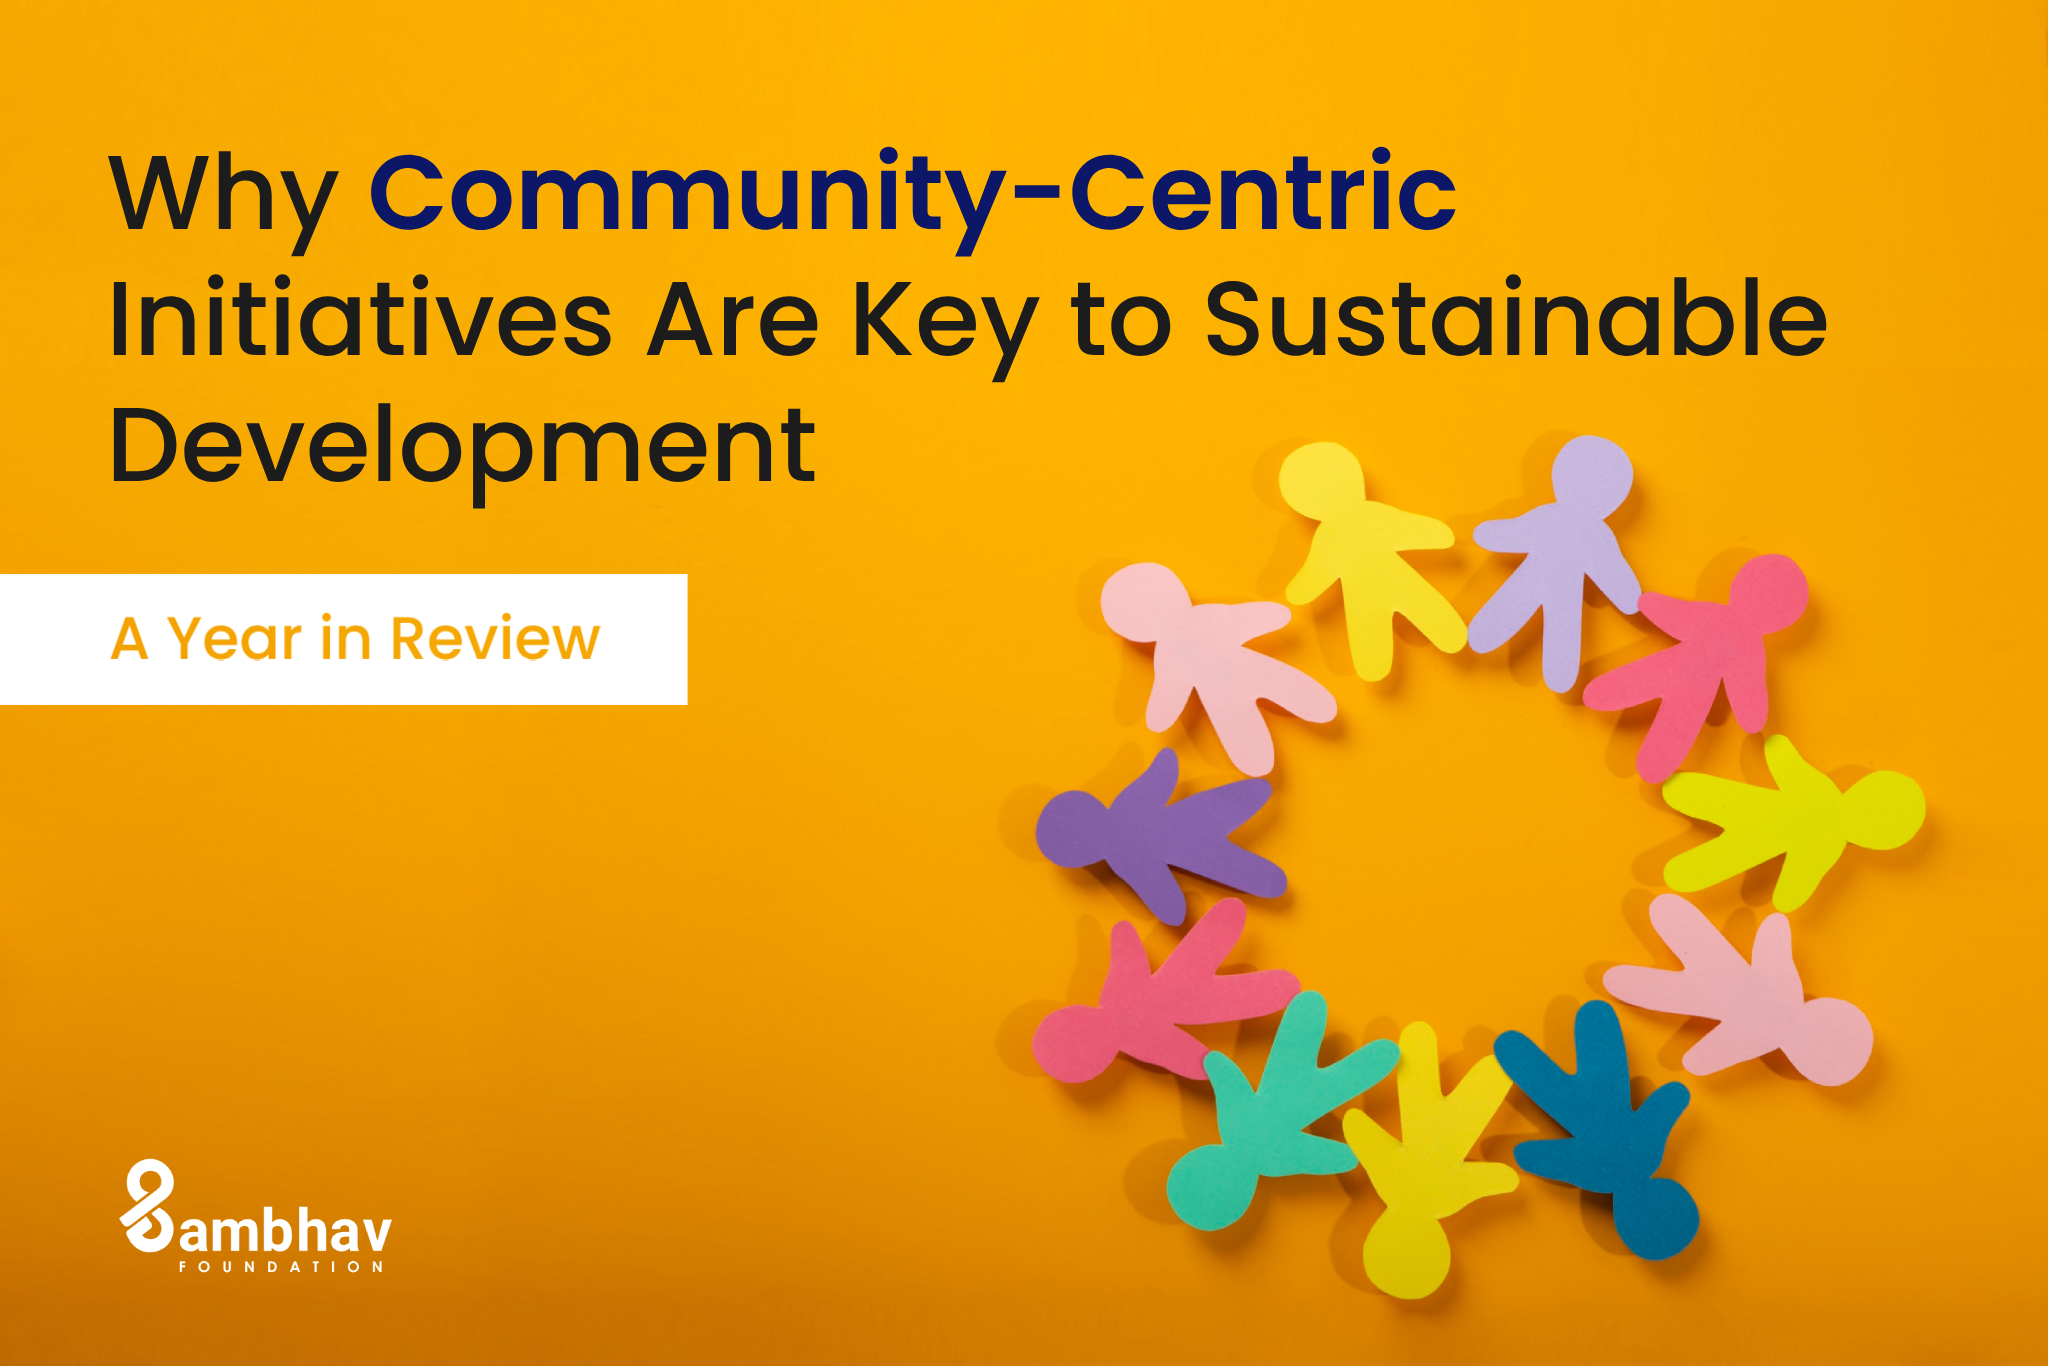 Community-Centric Initiatives